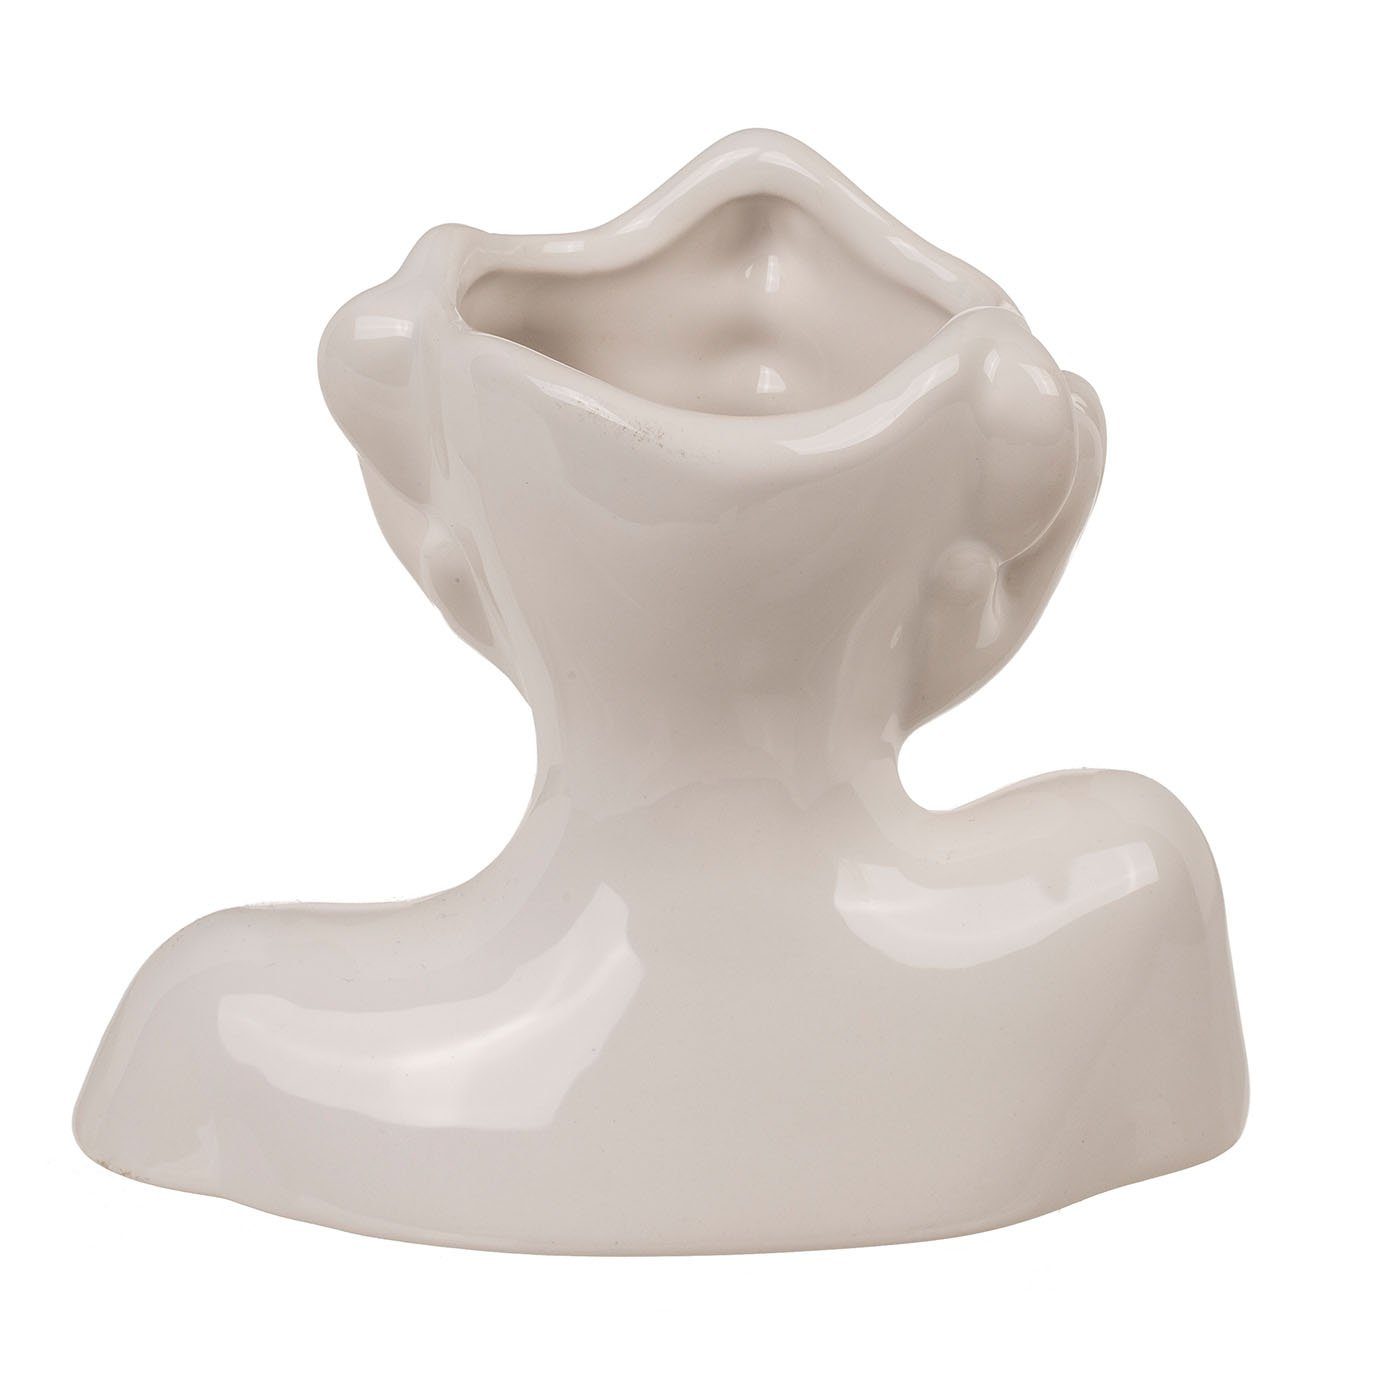 ReWu Dekovase Keramik-Vase Face 7 cm x 14 x 11,5